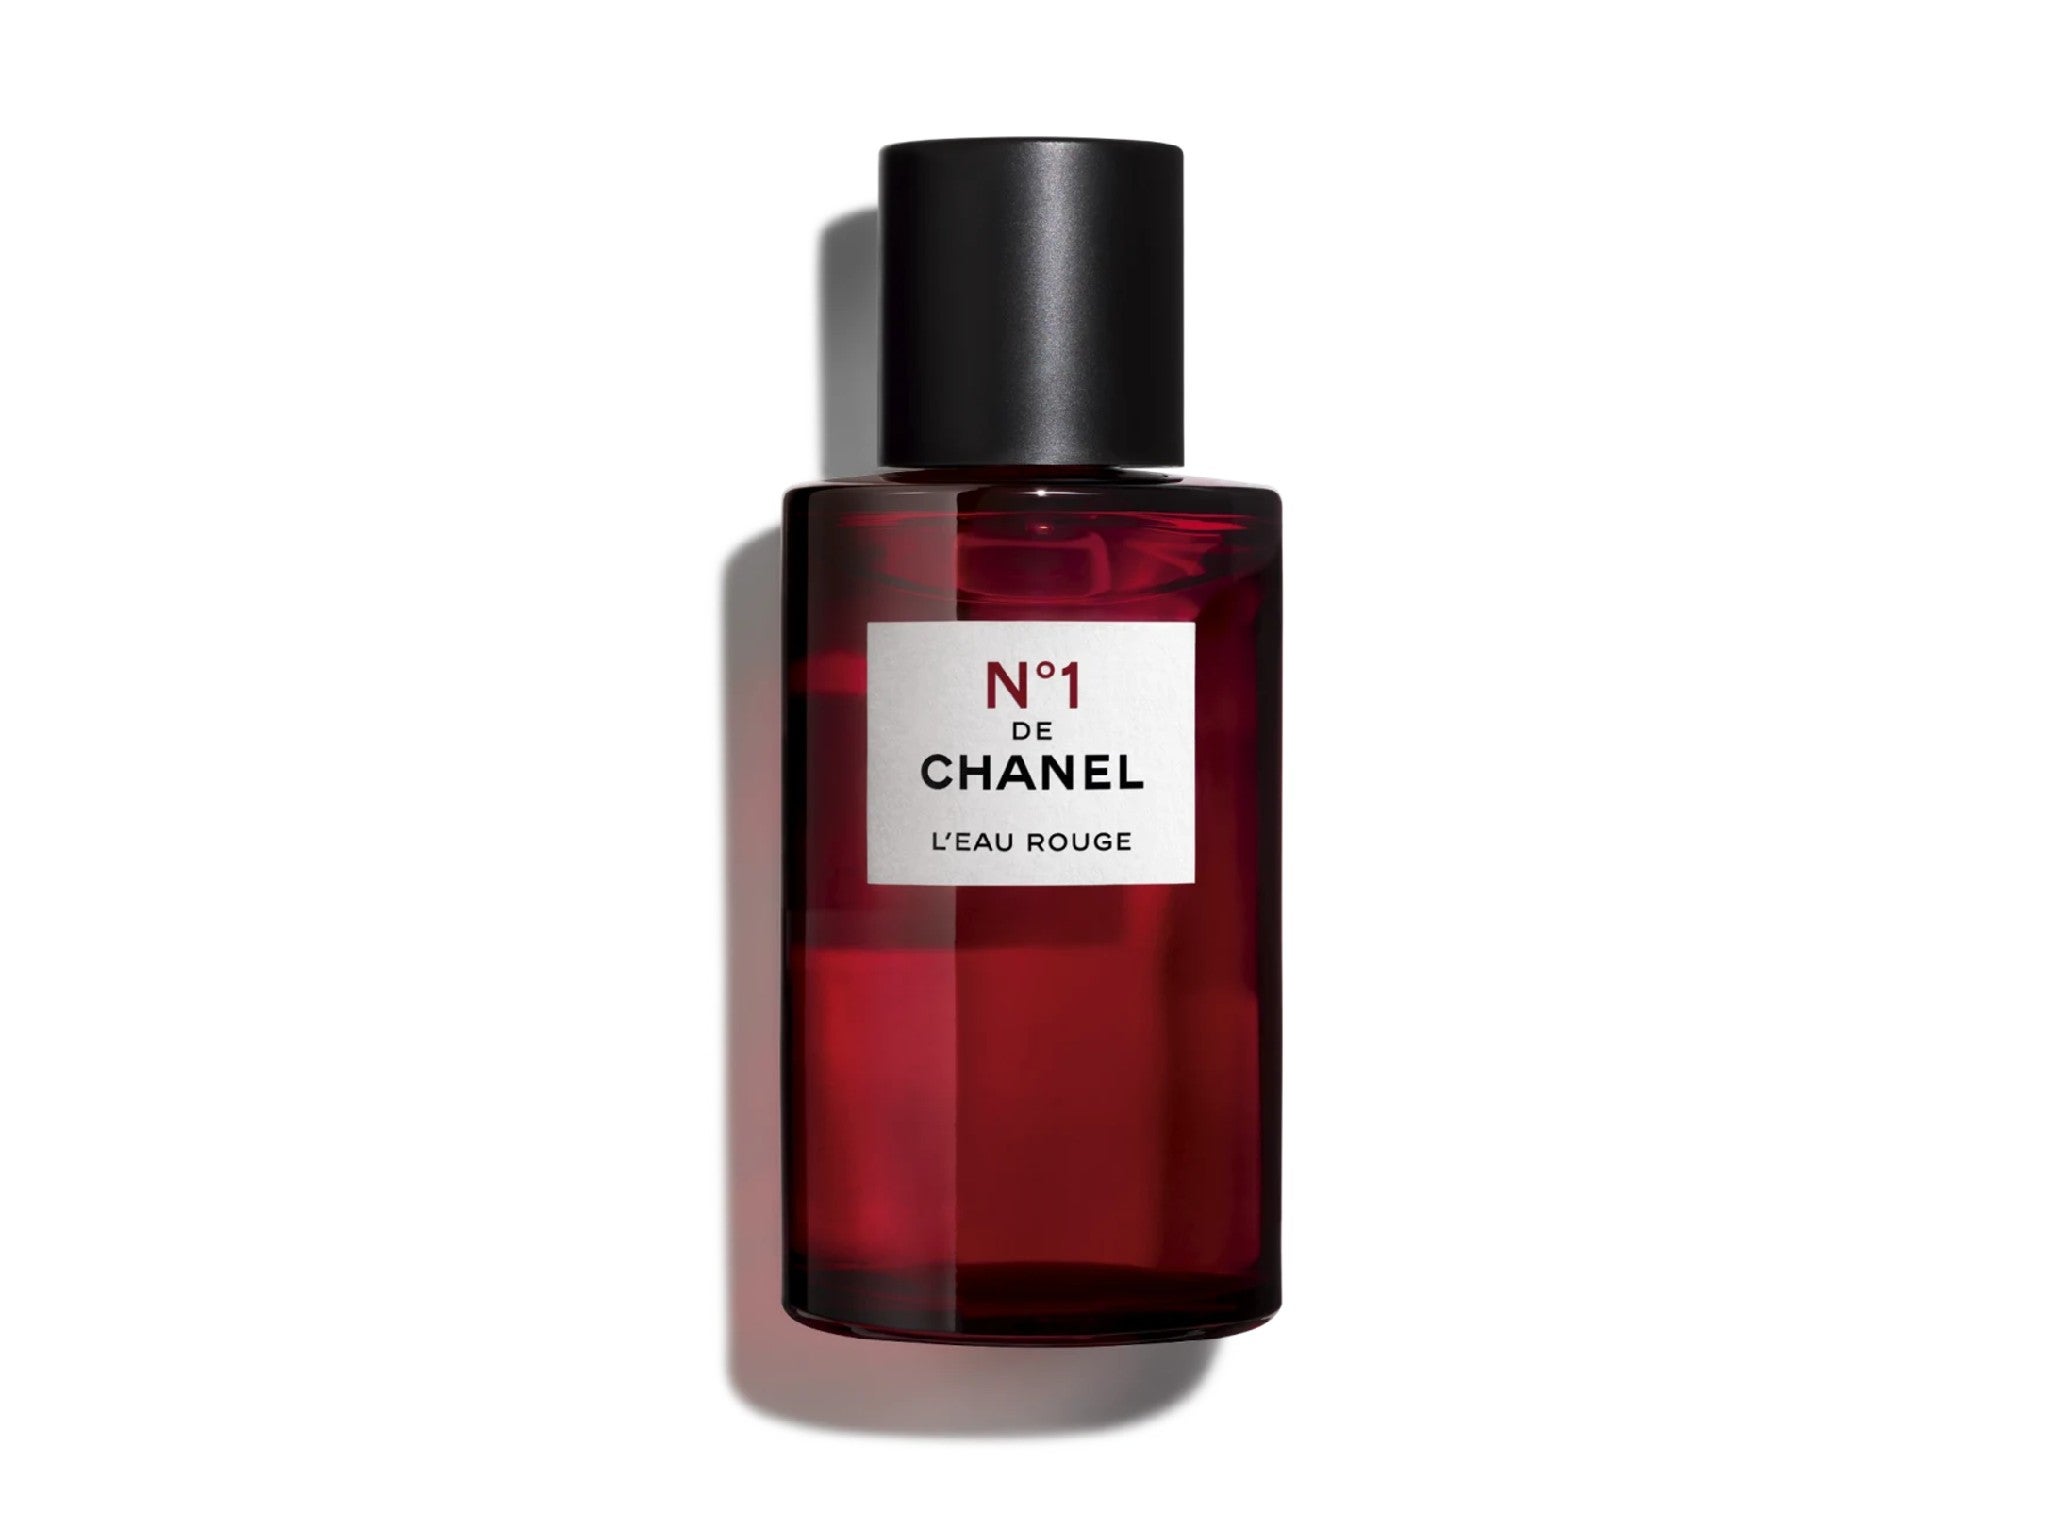 Chanel N°1 l’eau rouge body mist indybest.jpg